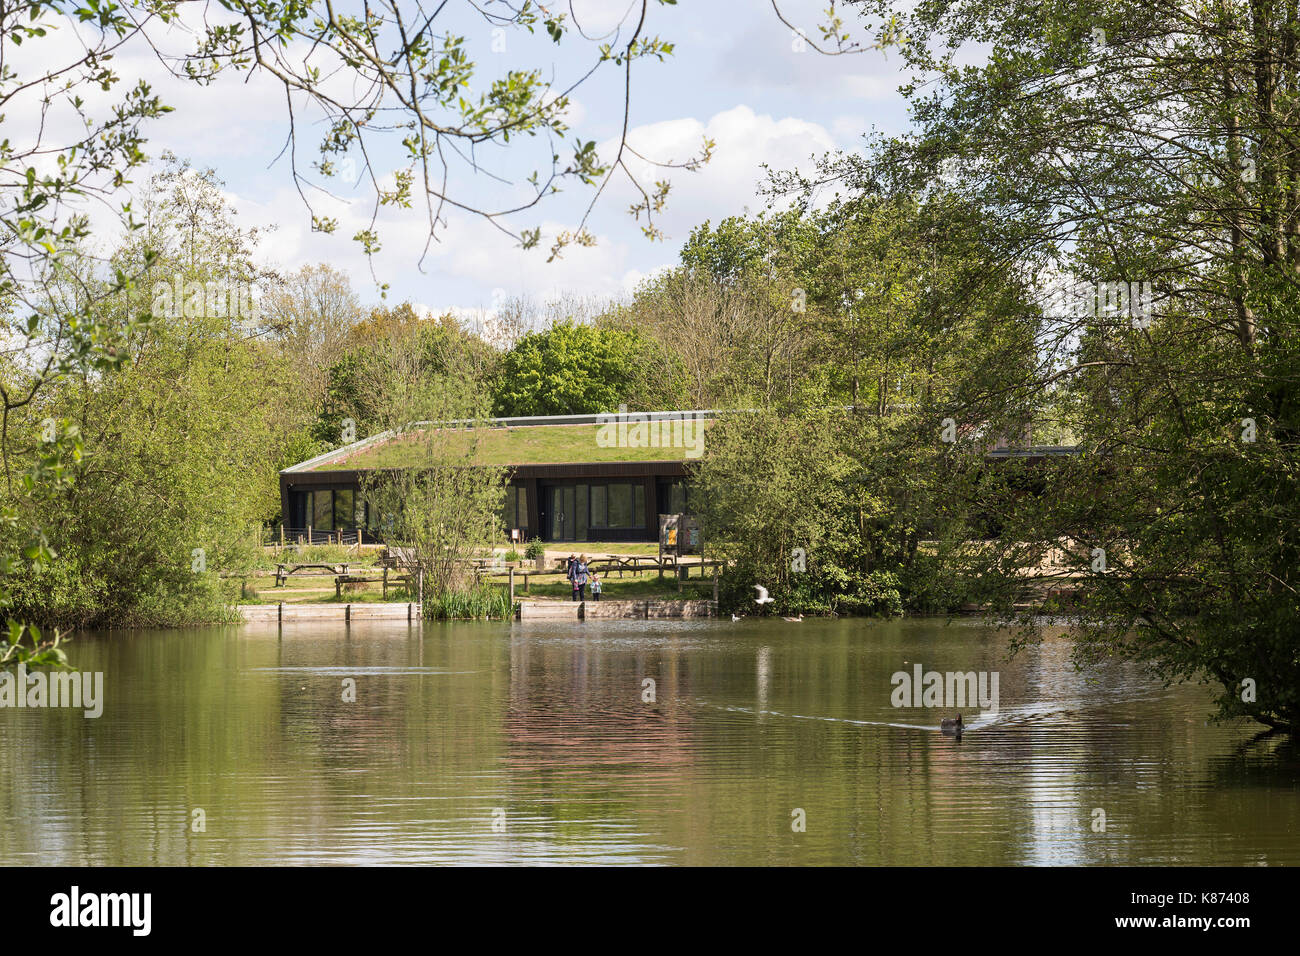 View across lake to pavilion. Lakeside Centre, Eastleigh, United Kingdom. Architect: R H Partnership Architects Ltd, 2017. Stock Photo